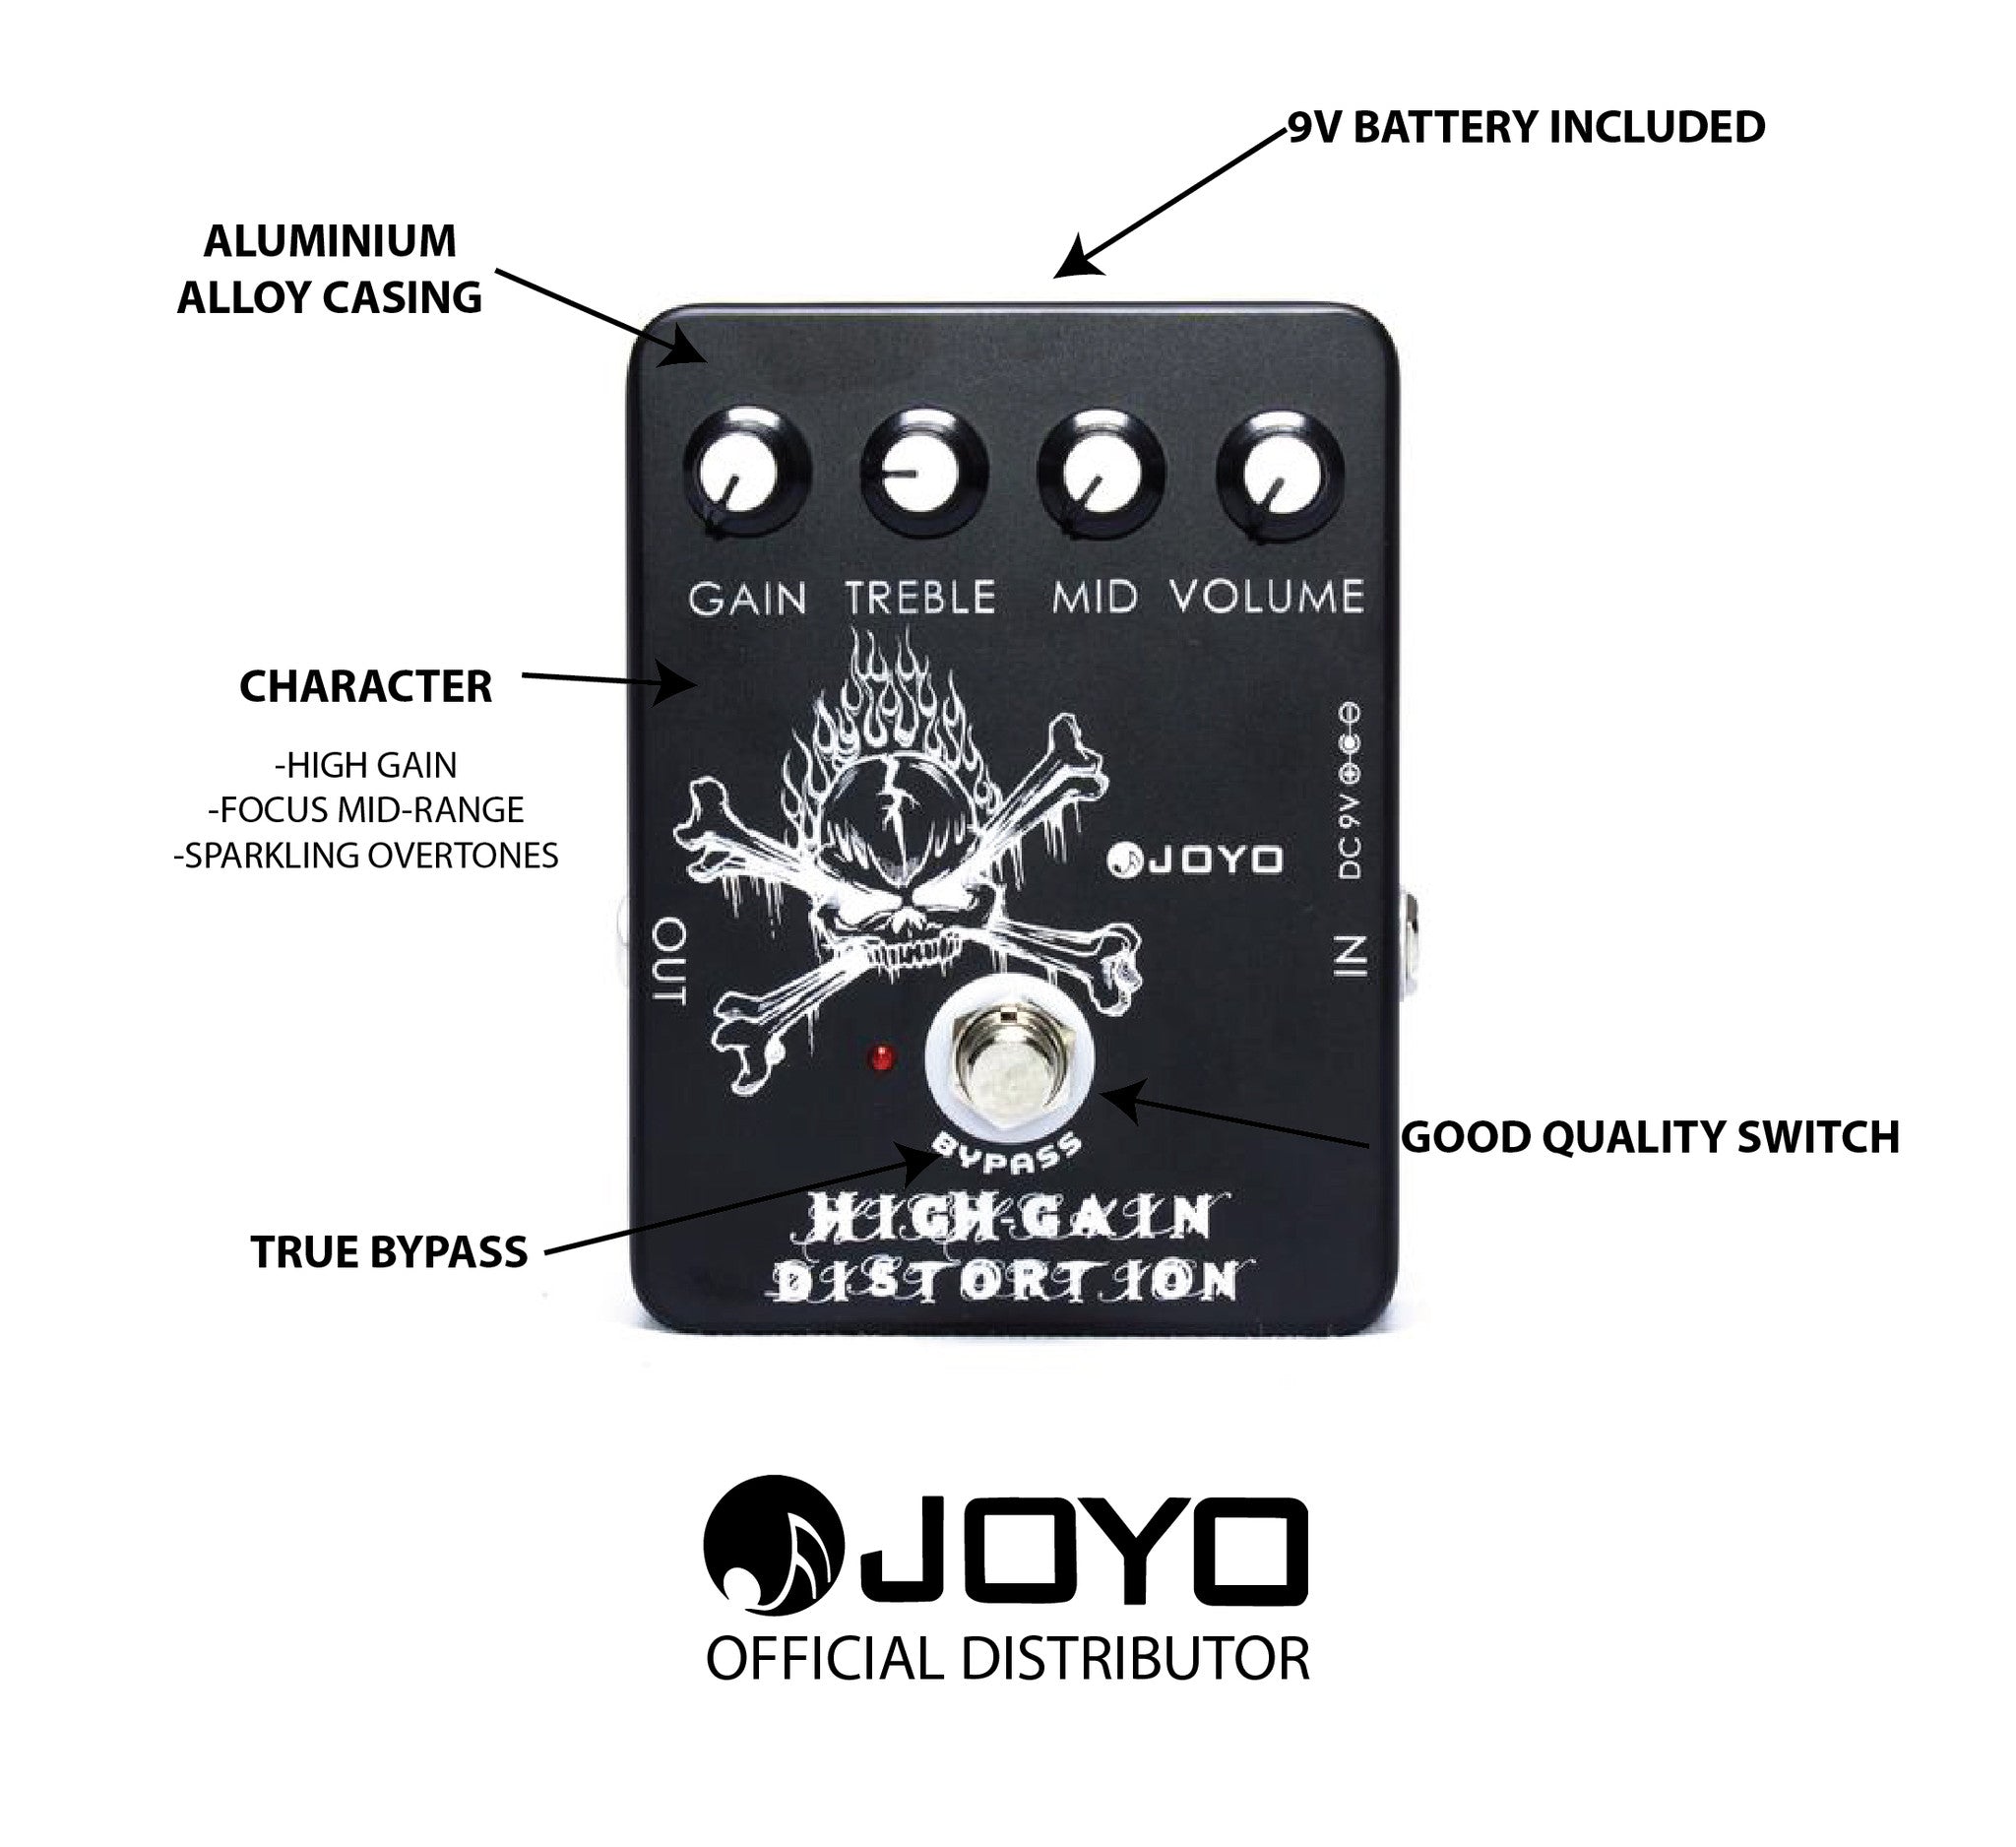 JOYO JF-04 HIGH GAIN DISTORTION, JOYO, EFFECTS, joyo-high-gain-distortion-jf-04-effect-pedals, ZOSO MUSIC SDN BHD